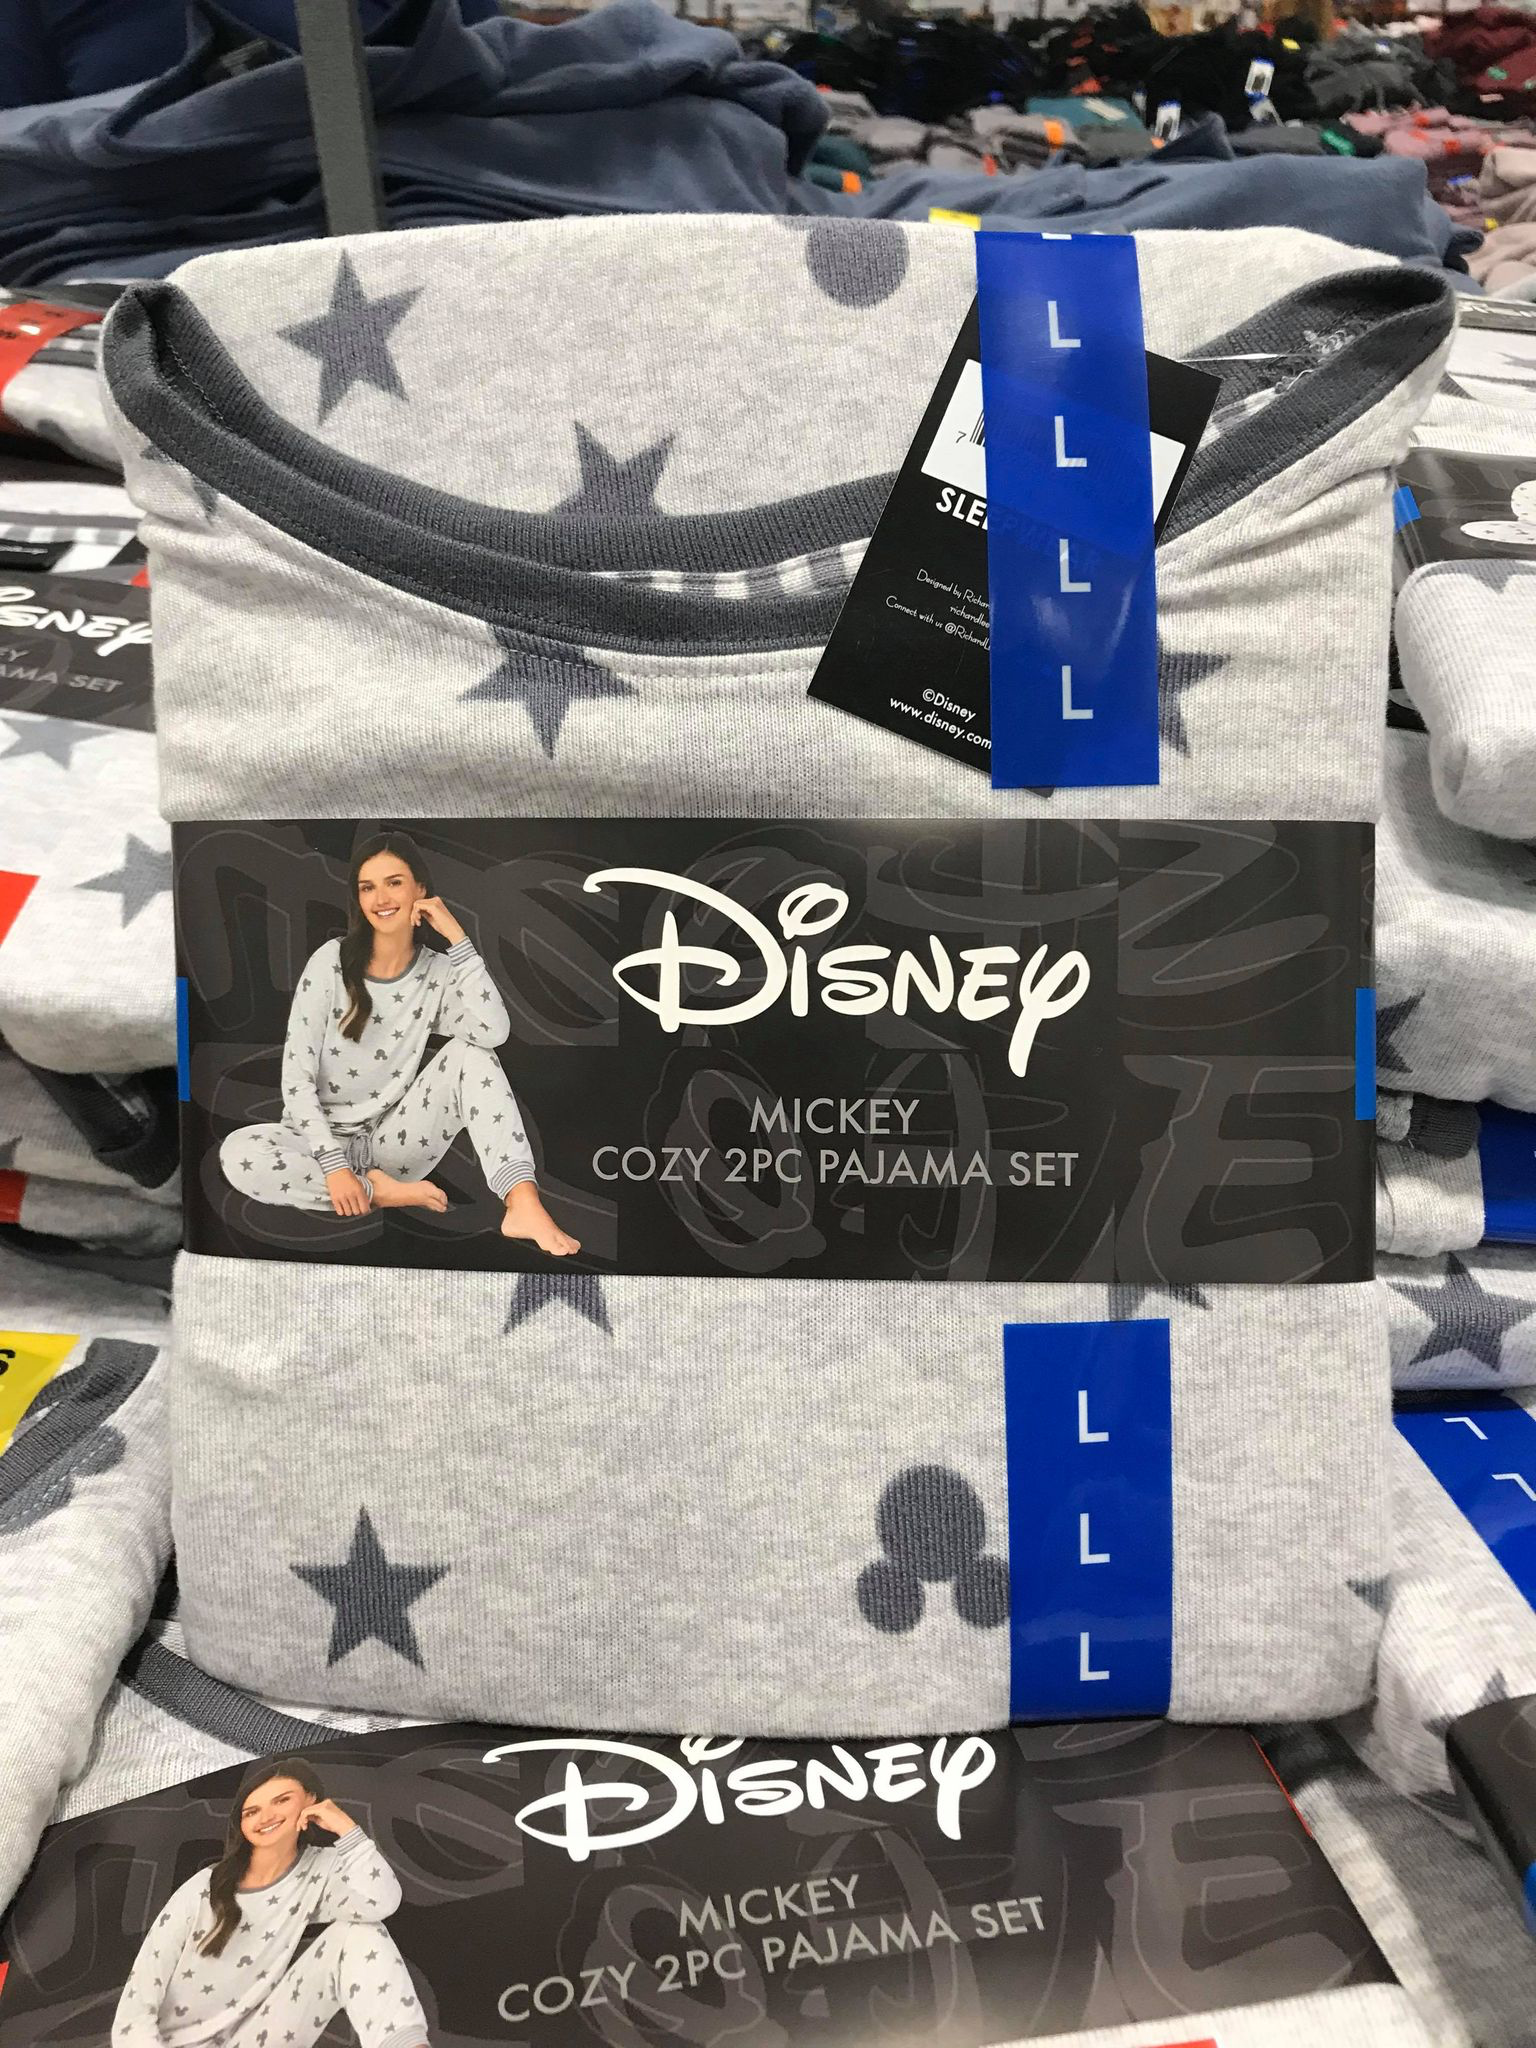 Costco is Selling the Coziest Disney Pajama Sets